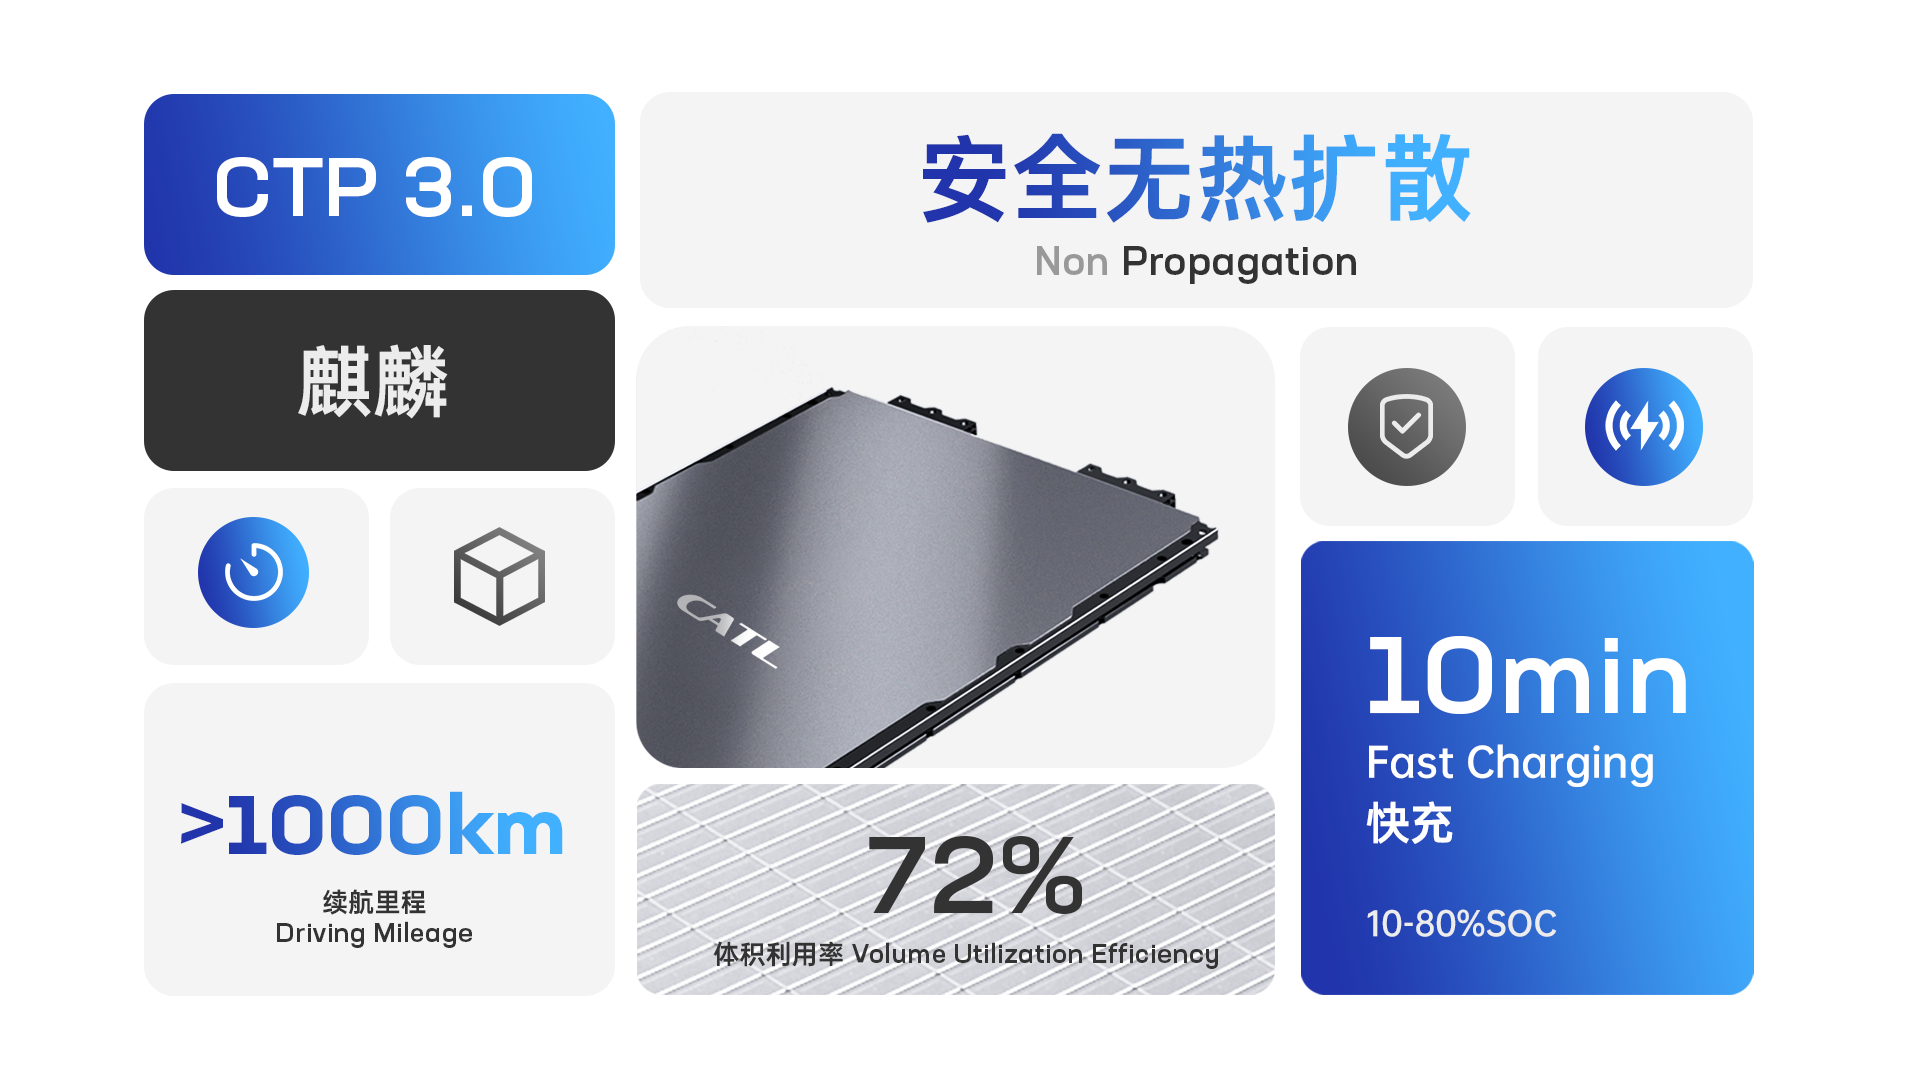 1.2 CTP 3.0麒麟电池性能 CTP 3.0 Qilin Battery Performance.png